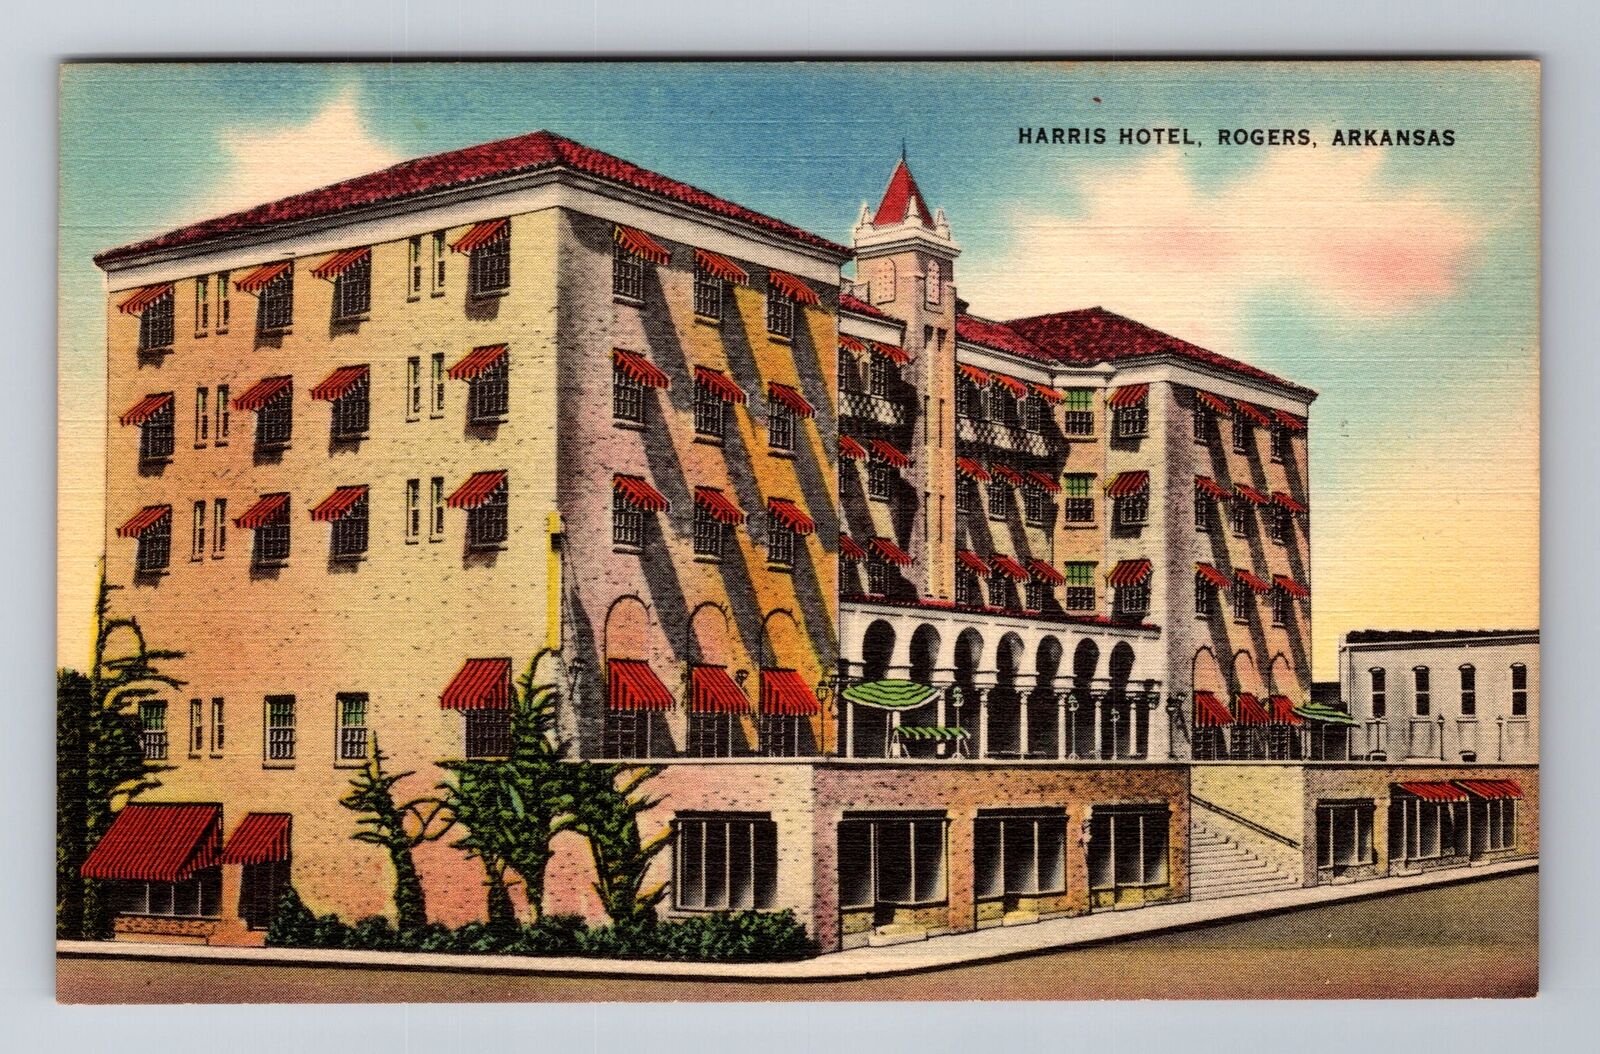 Rogers AR-Arkansas, Harris Hotel, Advertising, Vintage Souvenir Postcard